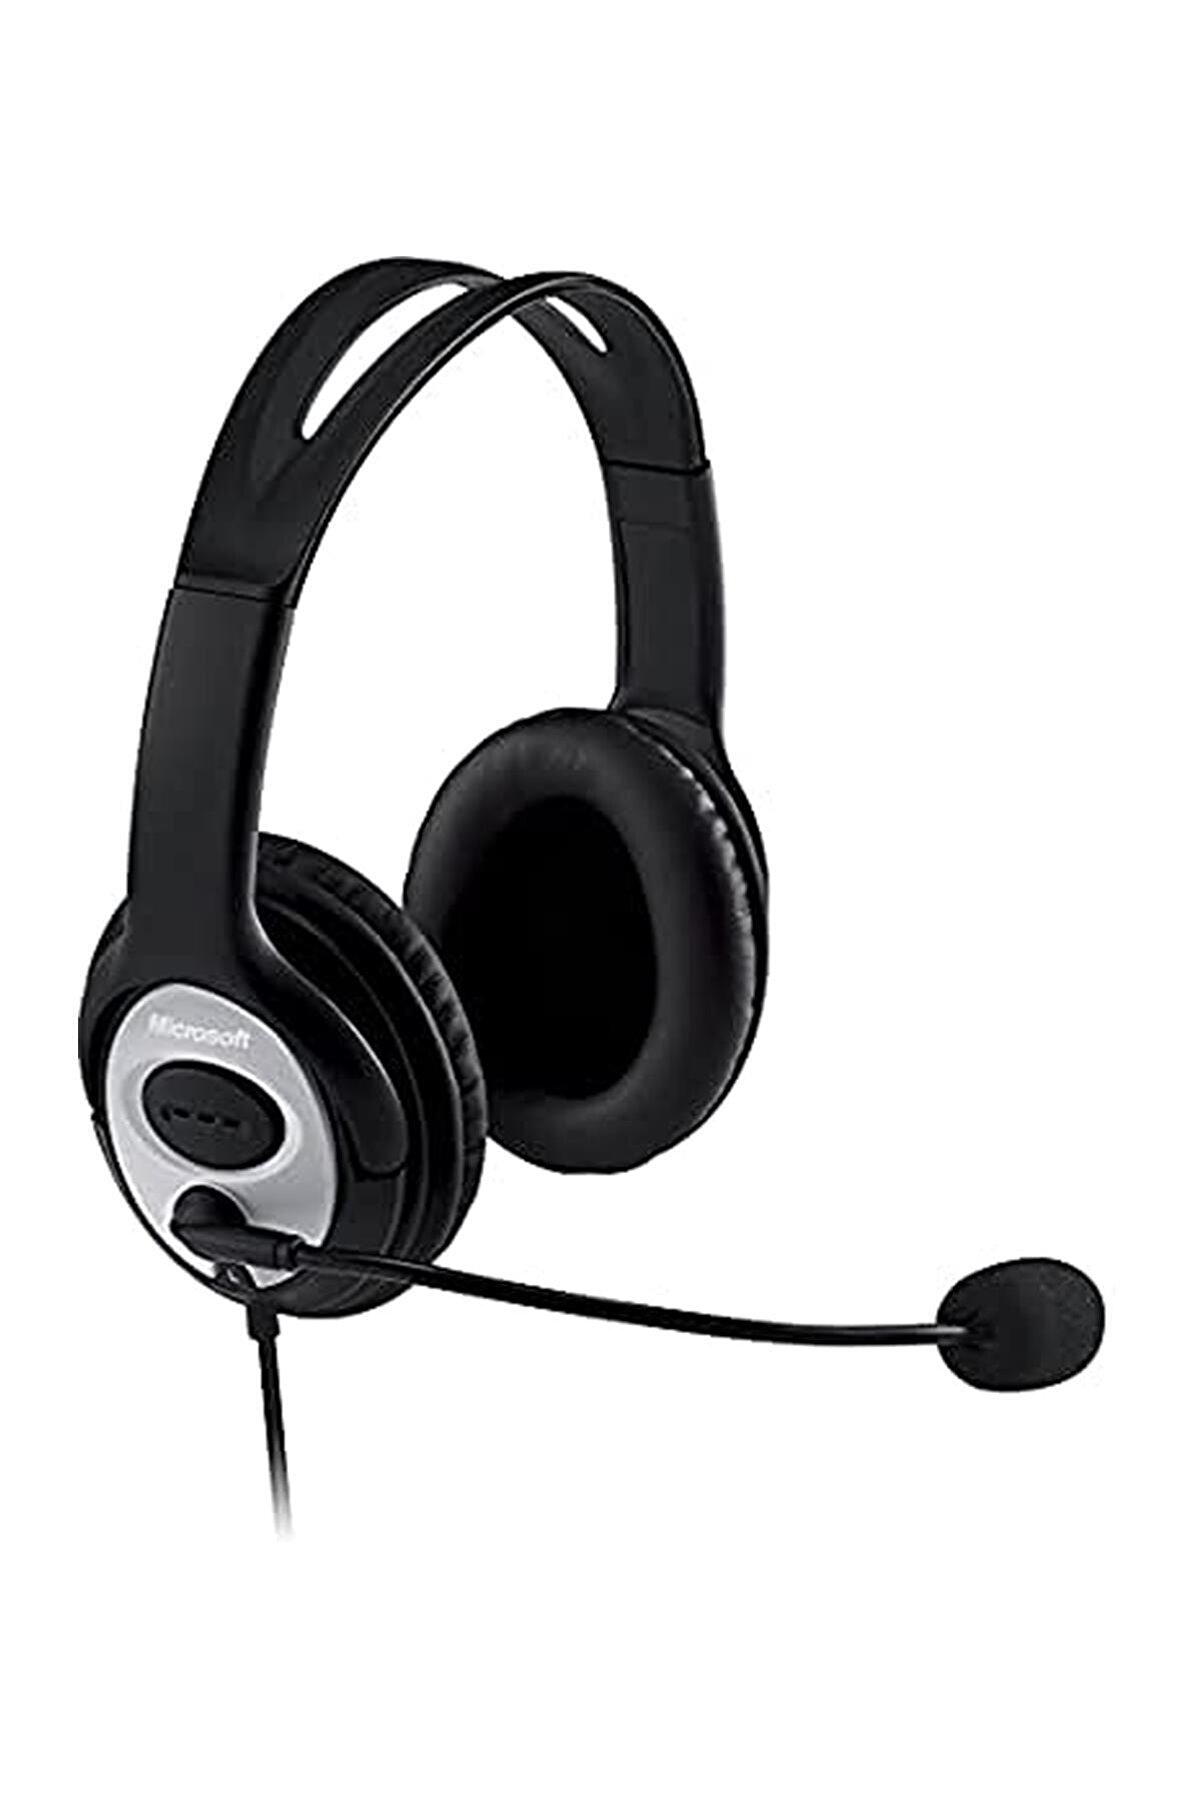 Microsoft Marka: Microsoft Jug-00014 Lifechat Lx-3000 Kategori: Kulak Üstü Kablolu Kulaklık